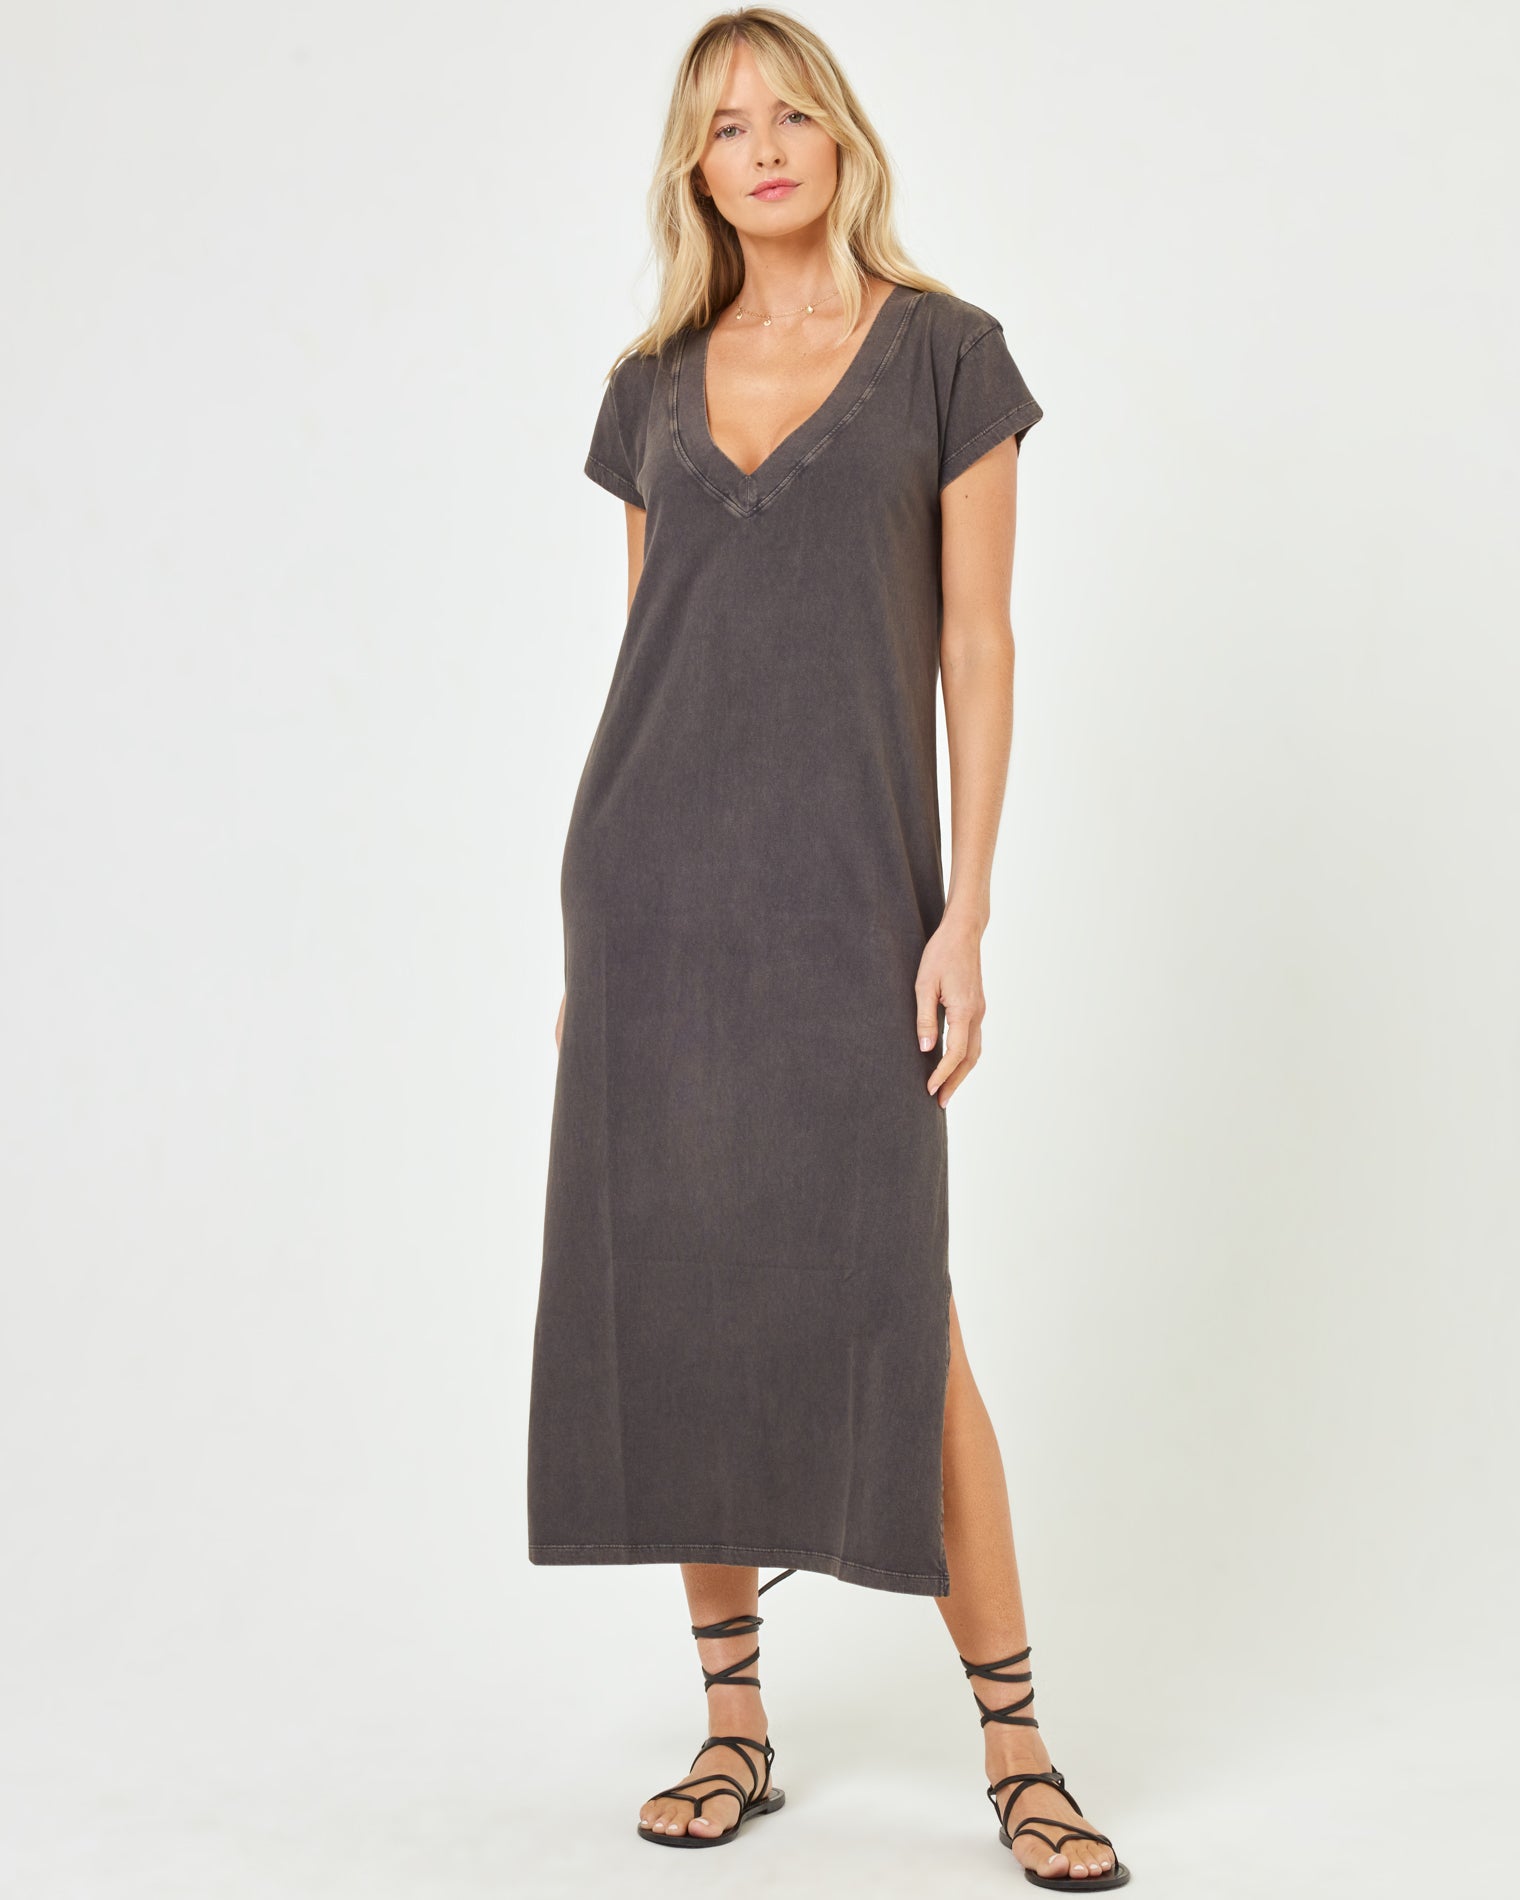 West Coast Dress - Ash Ash | Model: Lura (size: S)